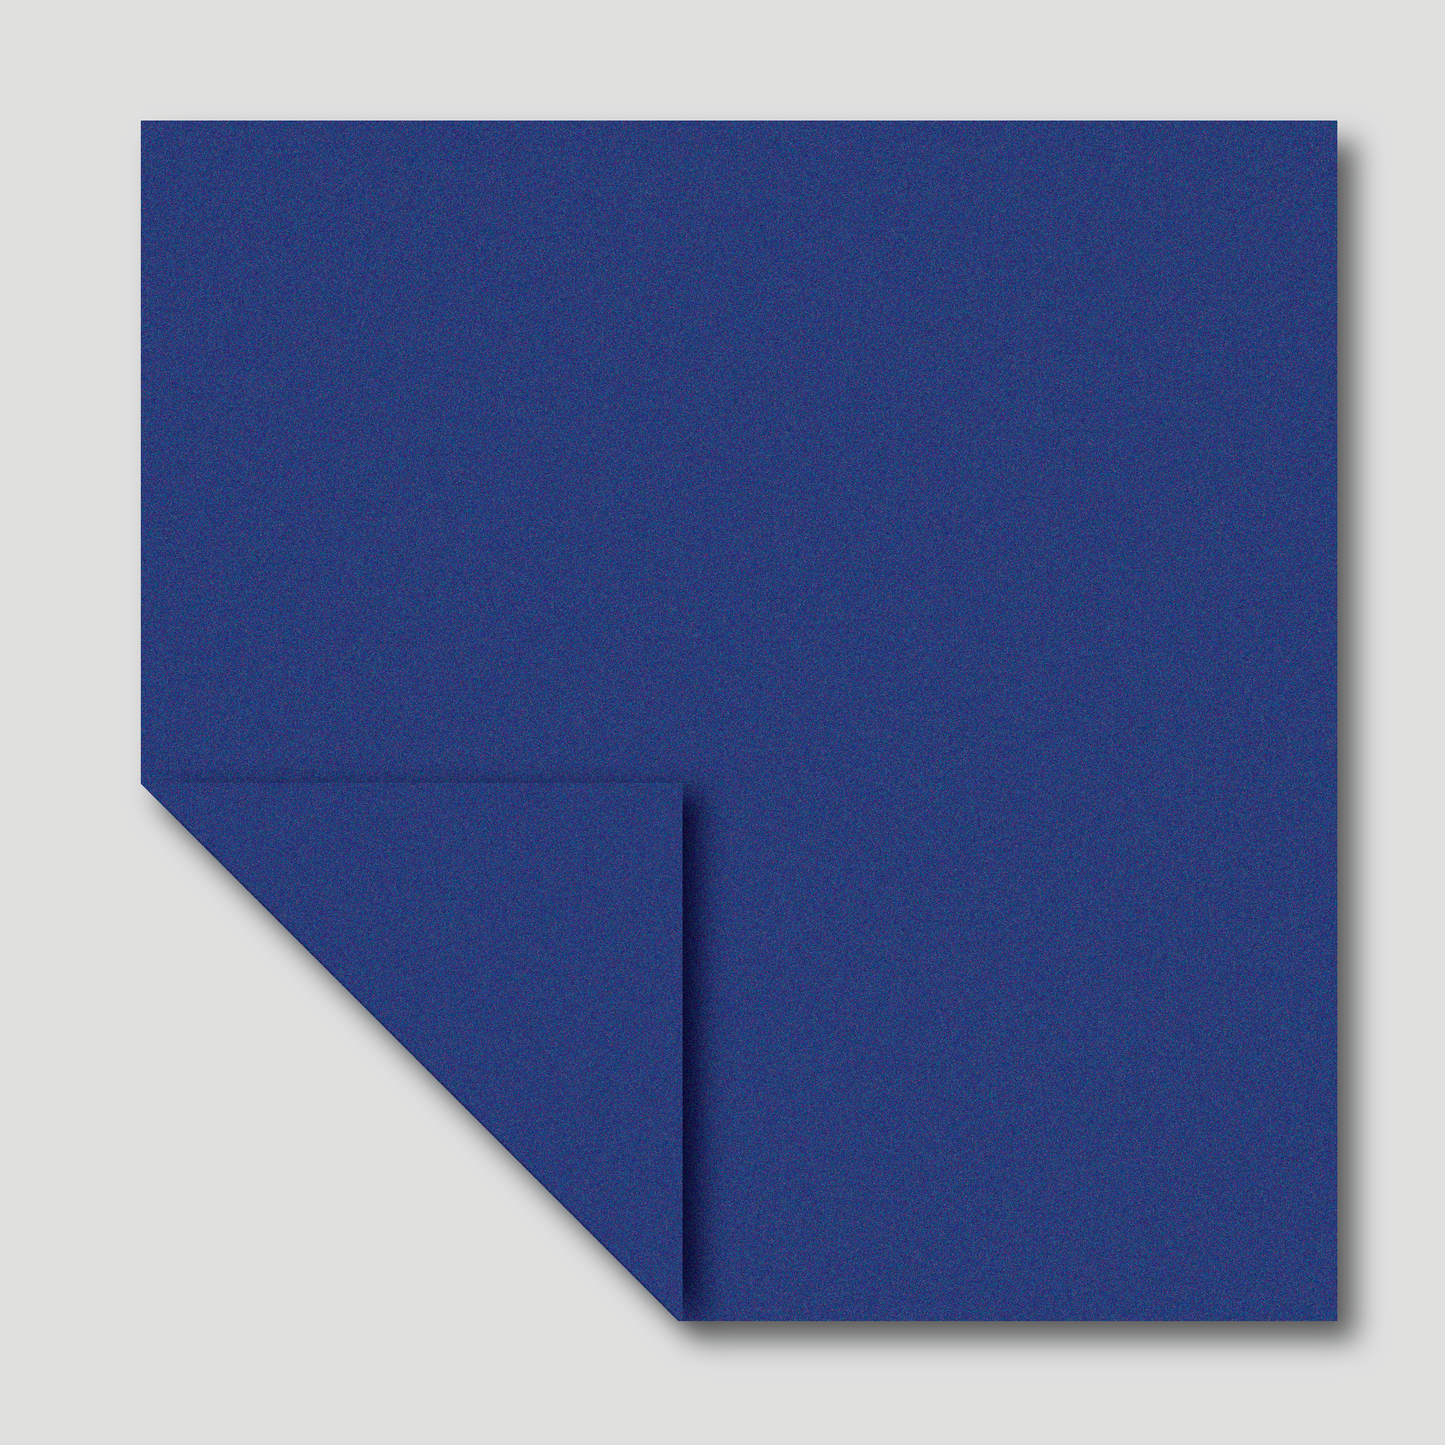 【Taro's Origami Studio】ビオトープ ジャンボ 13.75インチ/35cm 単色(マゼランブルー) 10枚入(全同色) 上級フォルダー用高級和紙(日本製)